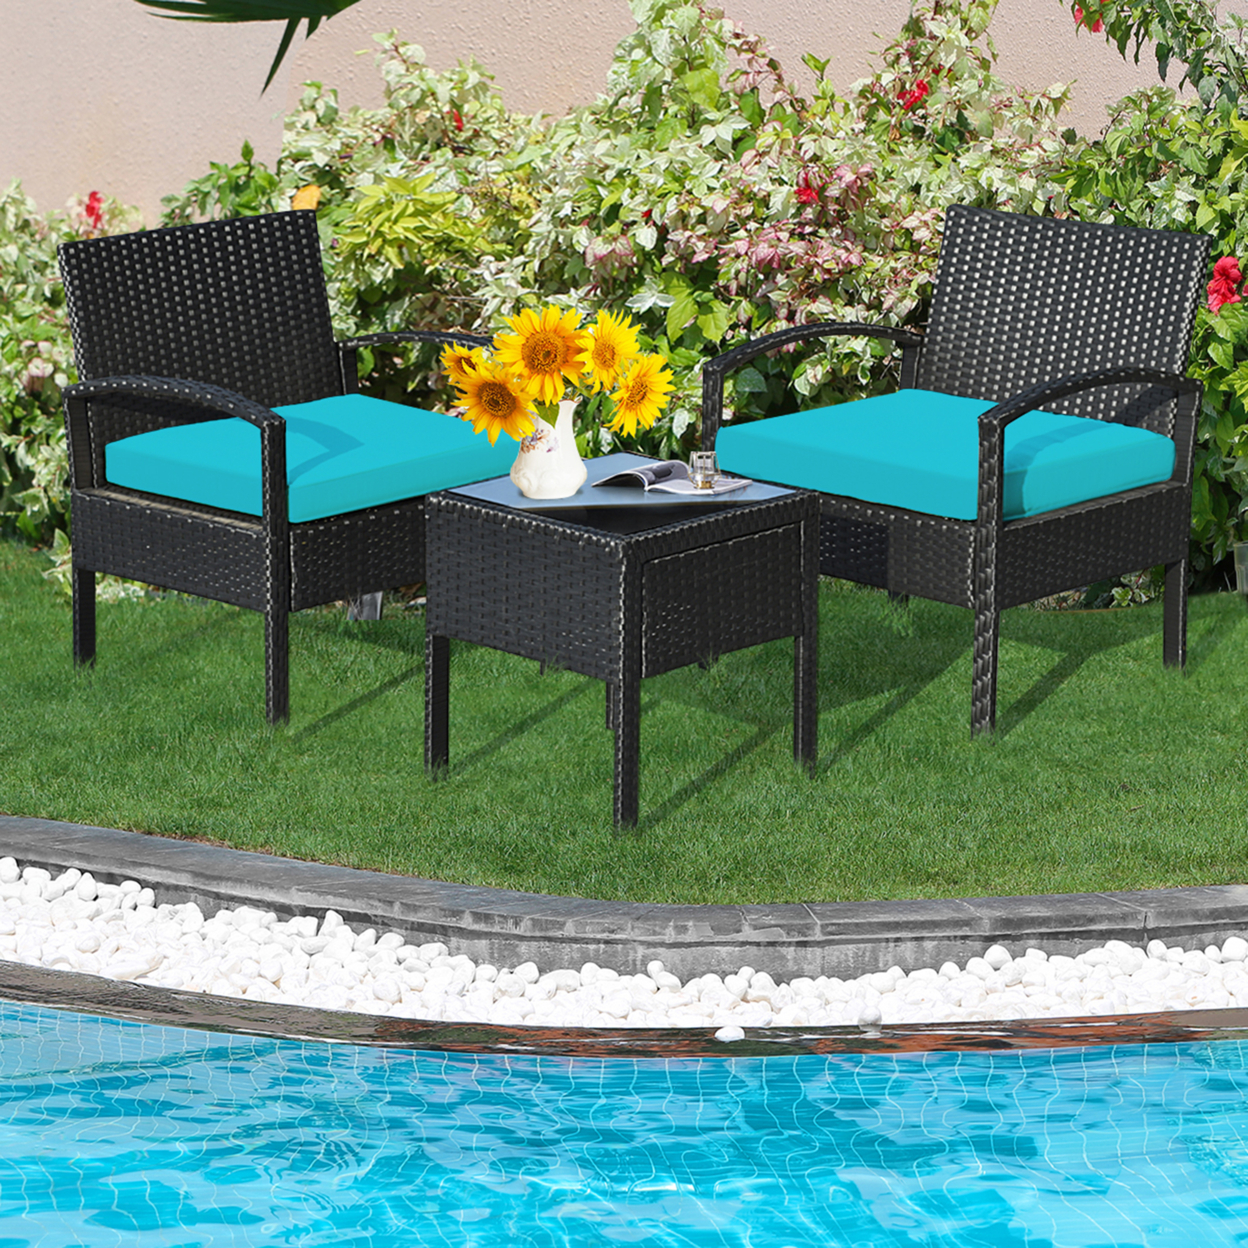 3PCS Patio Rattan Conversation Furniture Set Outdoor Yard W/ Turquoise Cushions